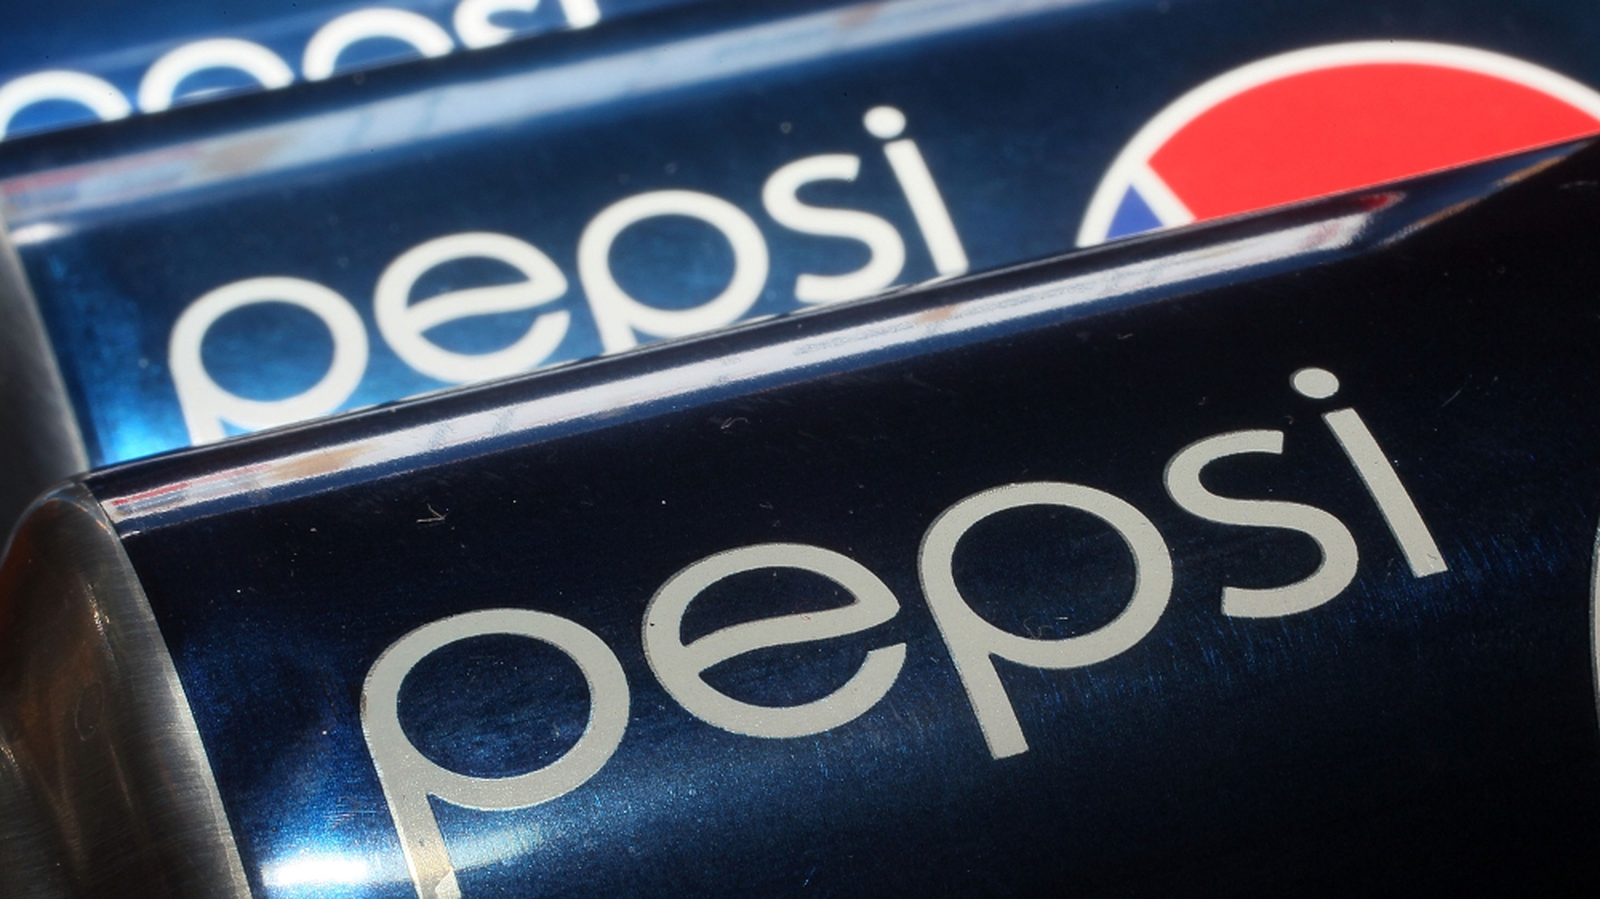 Pepsi revenue up 8.8% amid lockdown living